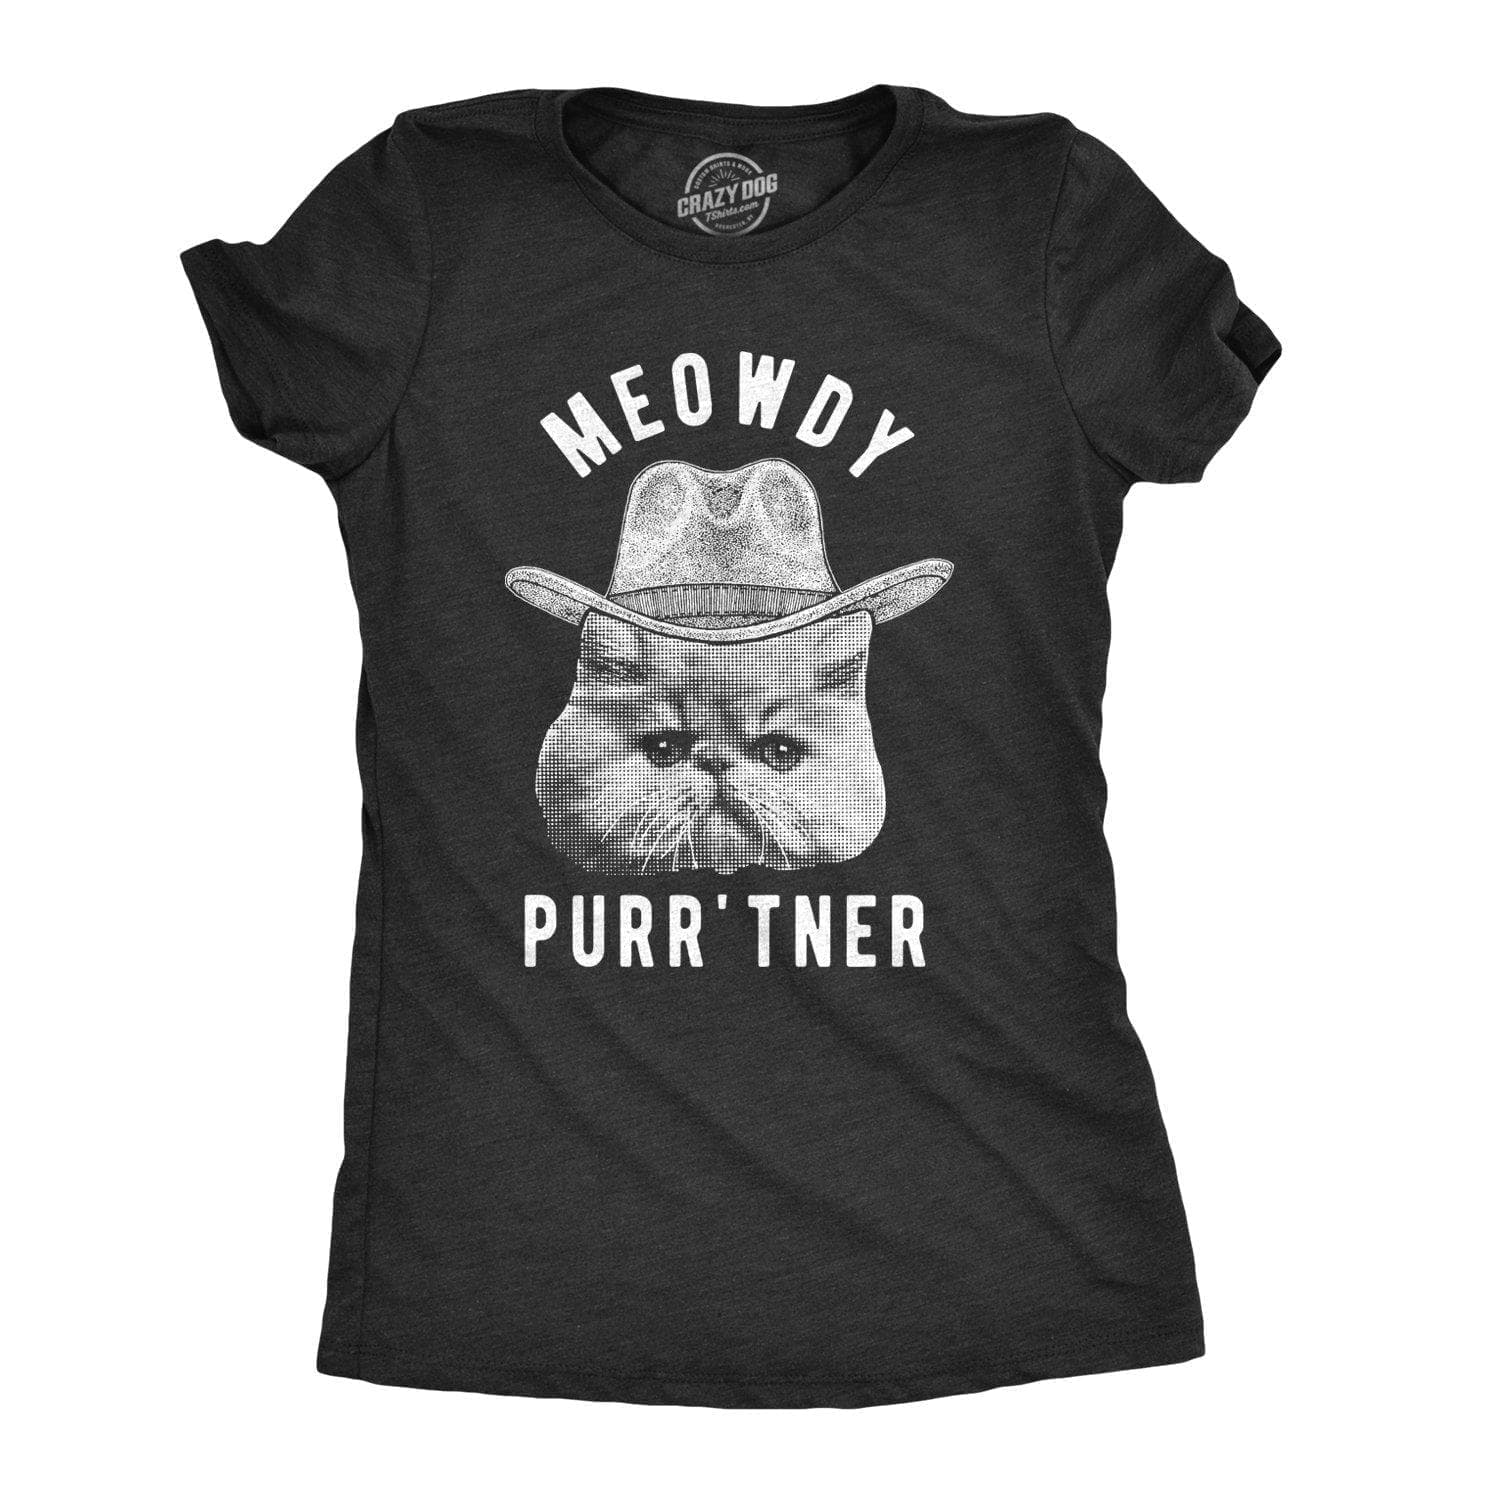 Meowdy Purr'tner Women's Tshirt  -  Crazy Dog T-Shirts